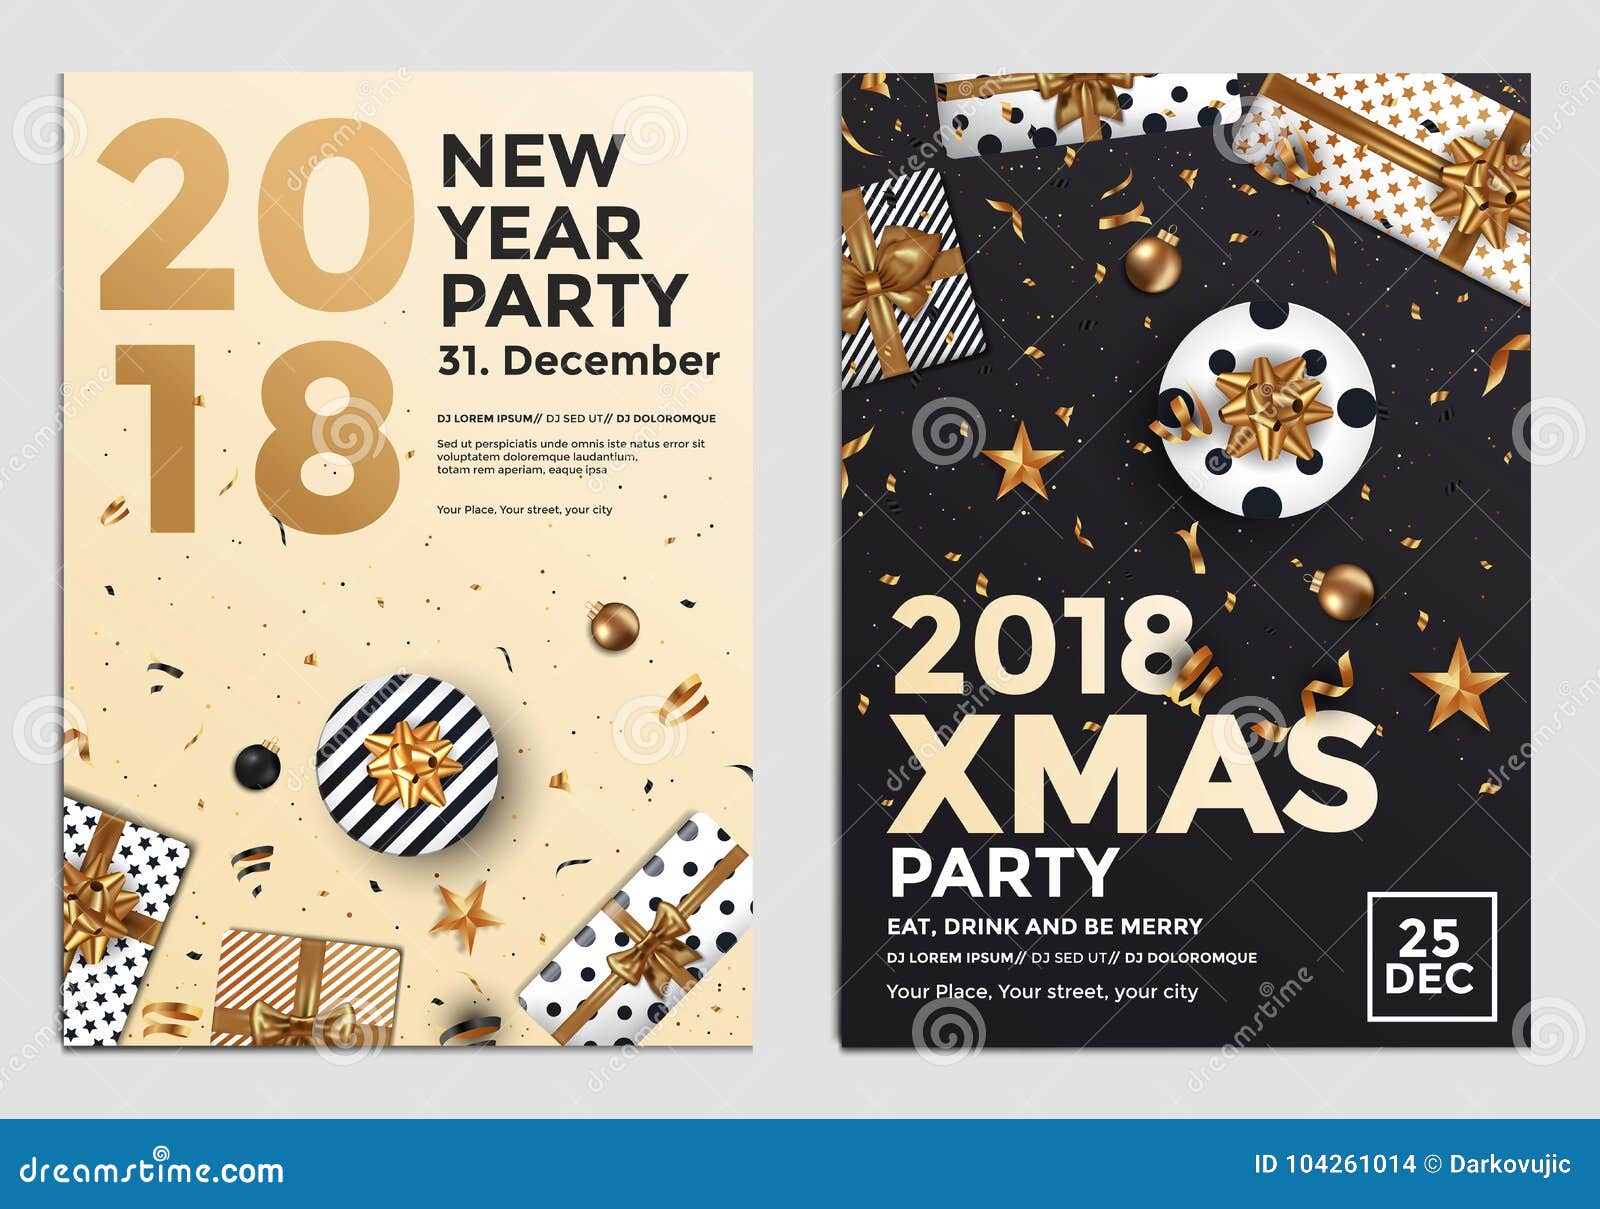 Christmas Party Flyer Design Golden Design 4 Stock Vector Illustration Of Holiday December